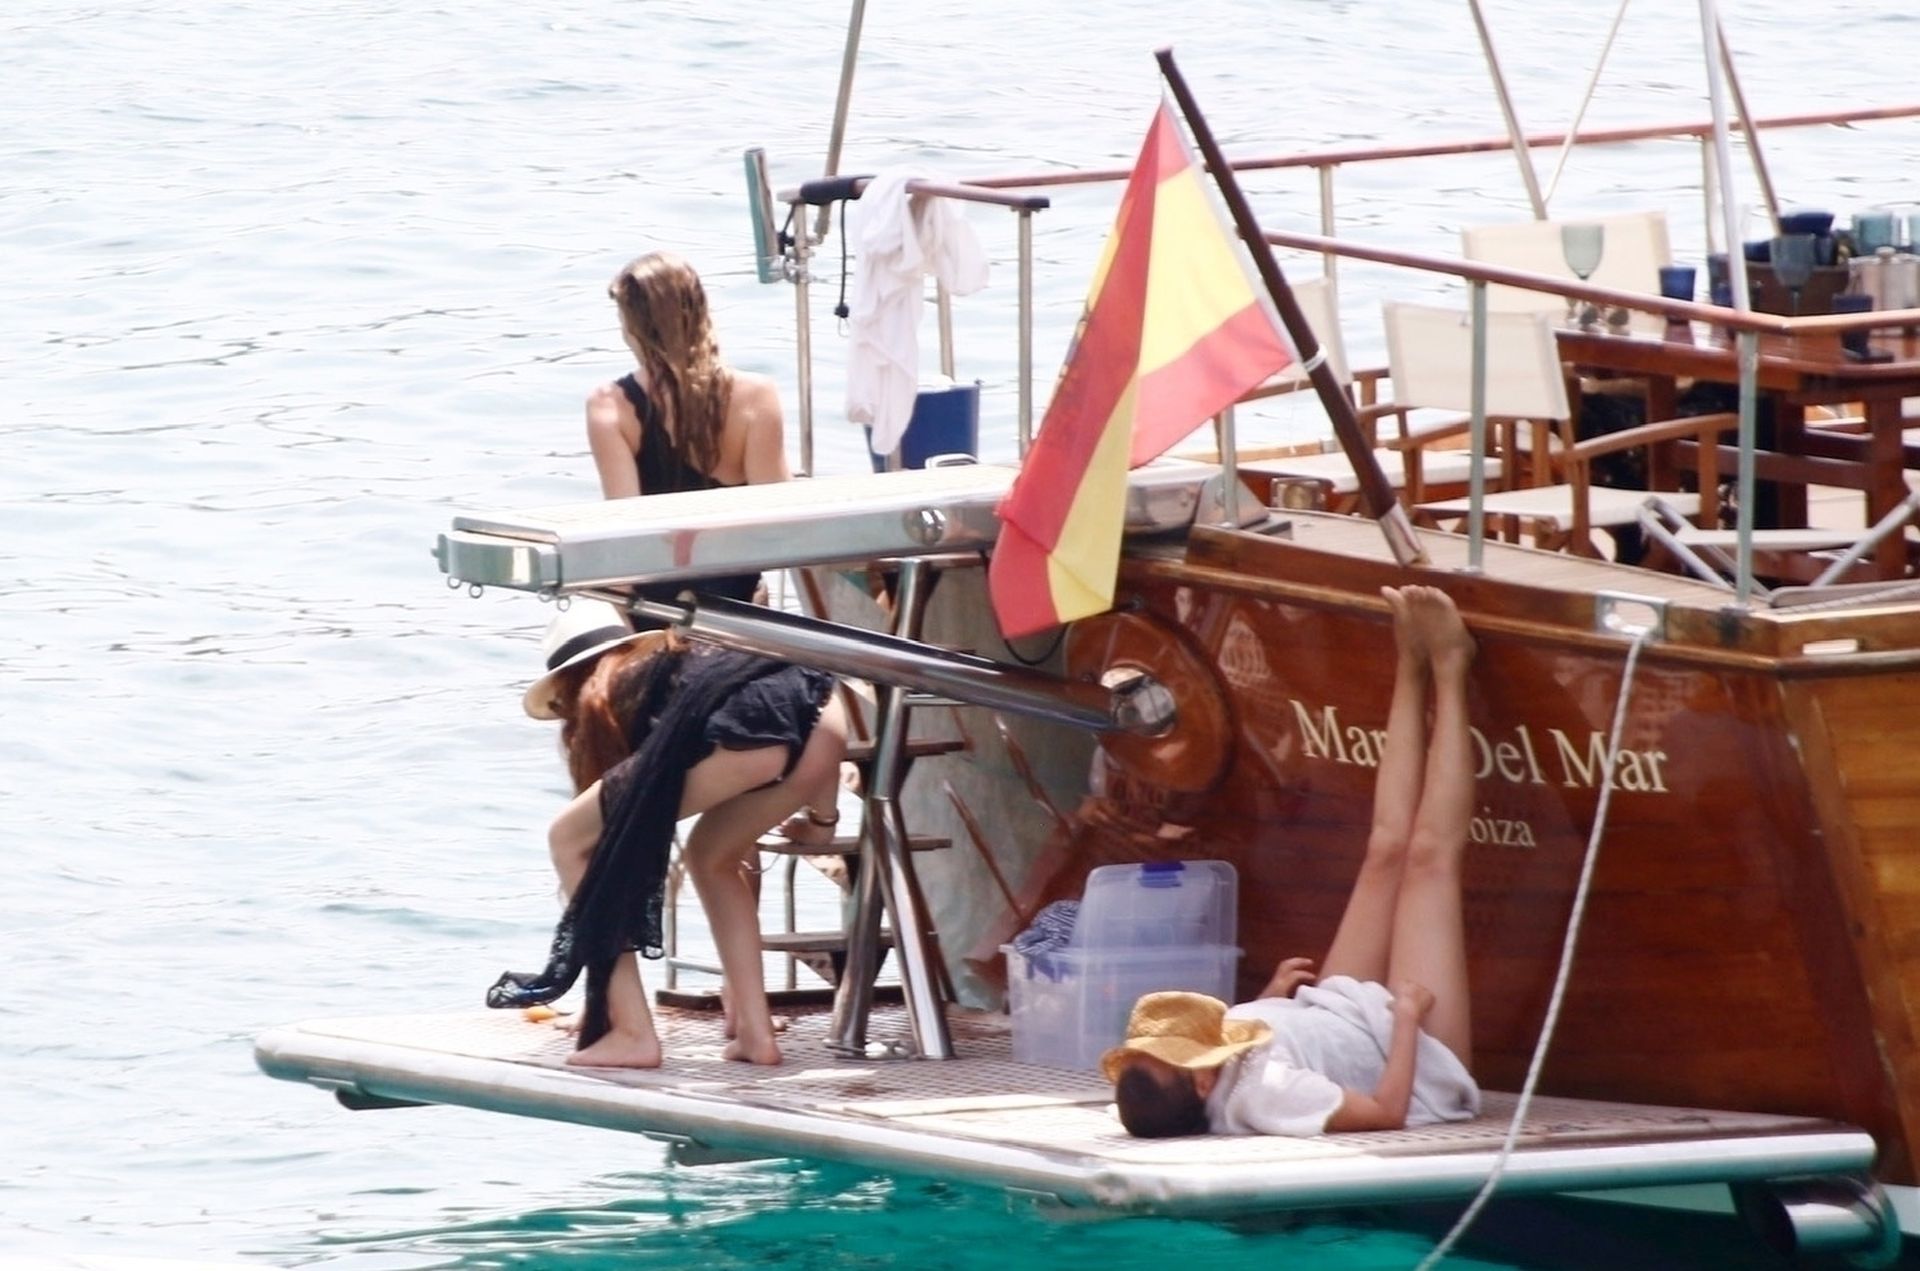 Singer-songwriter and DJ Chloe Jane is seen enjoying the waters of Ibiza wi...